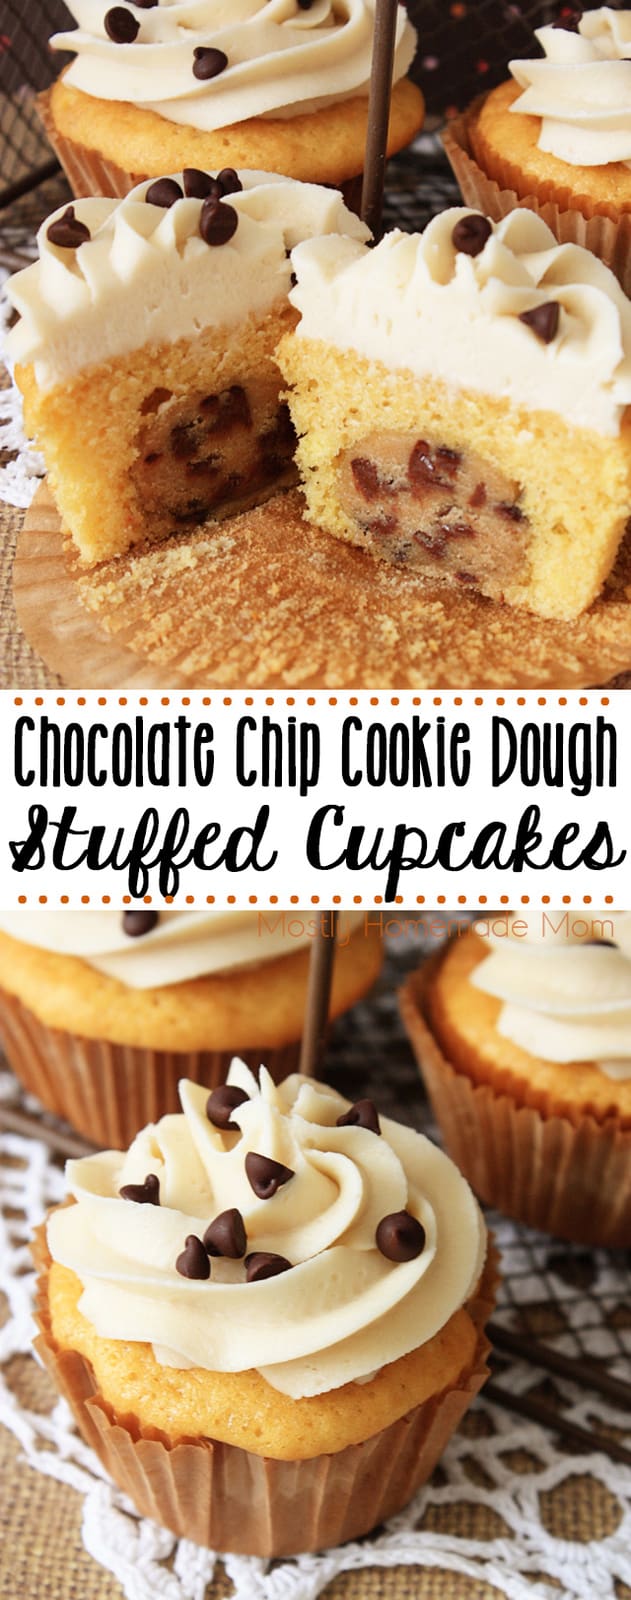 Cookie Dough Cupcakes - Mostly Homemade Mom